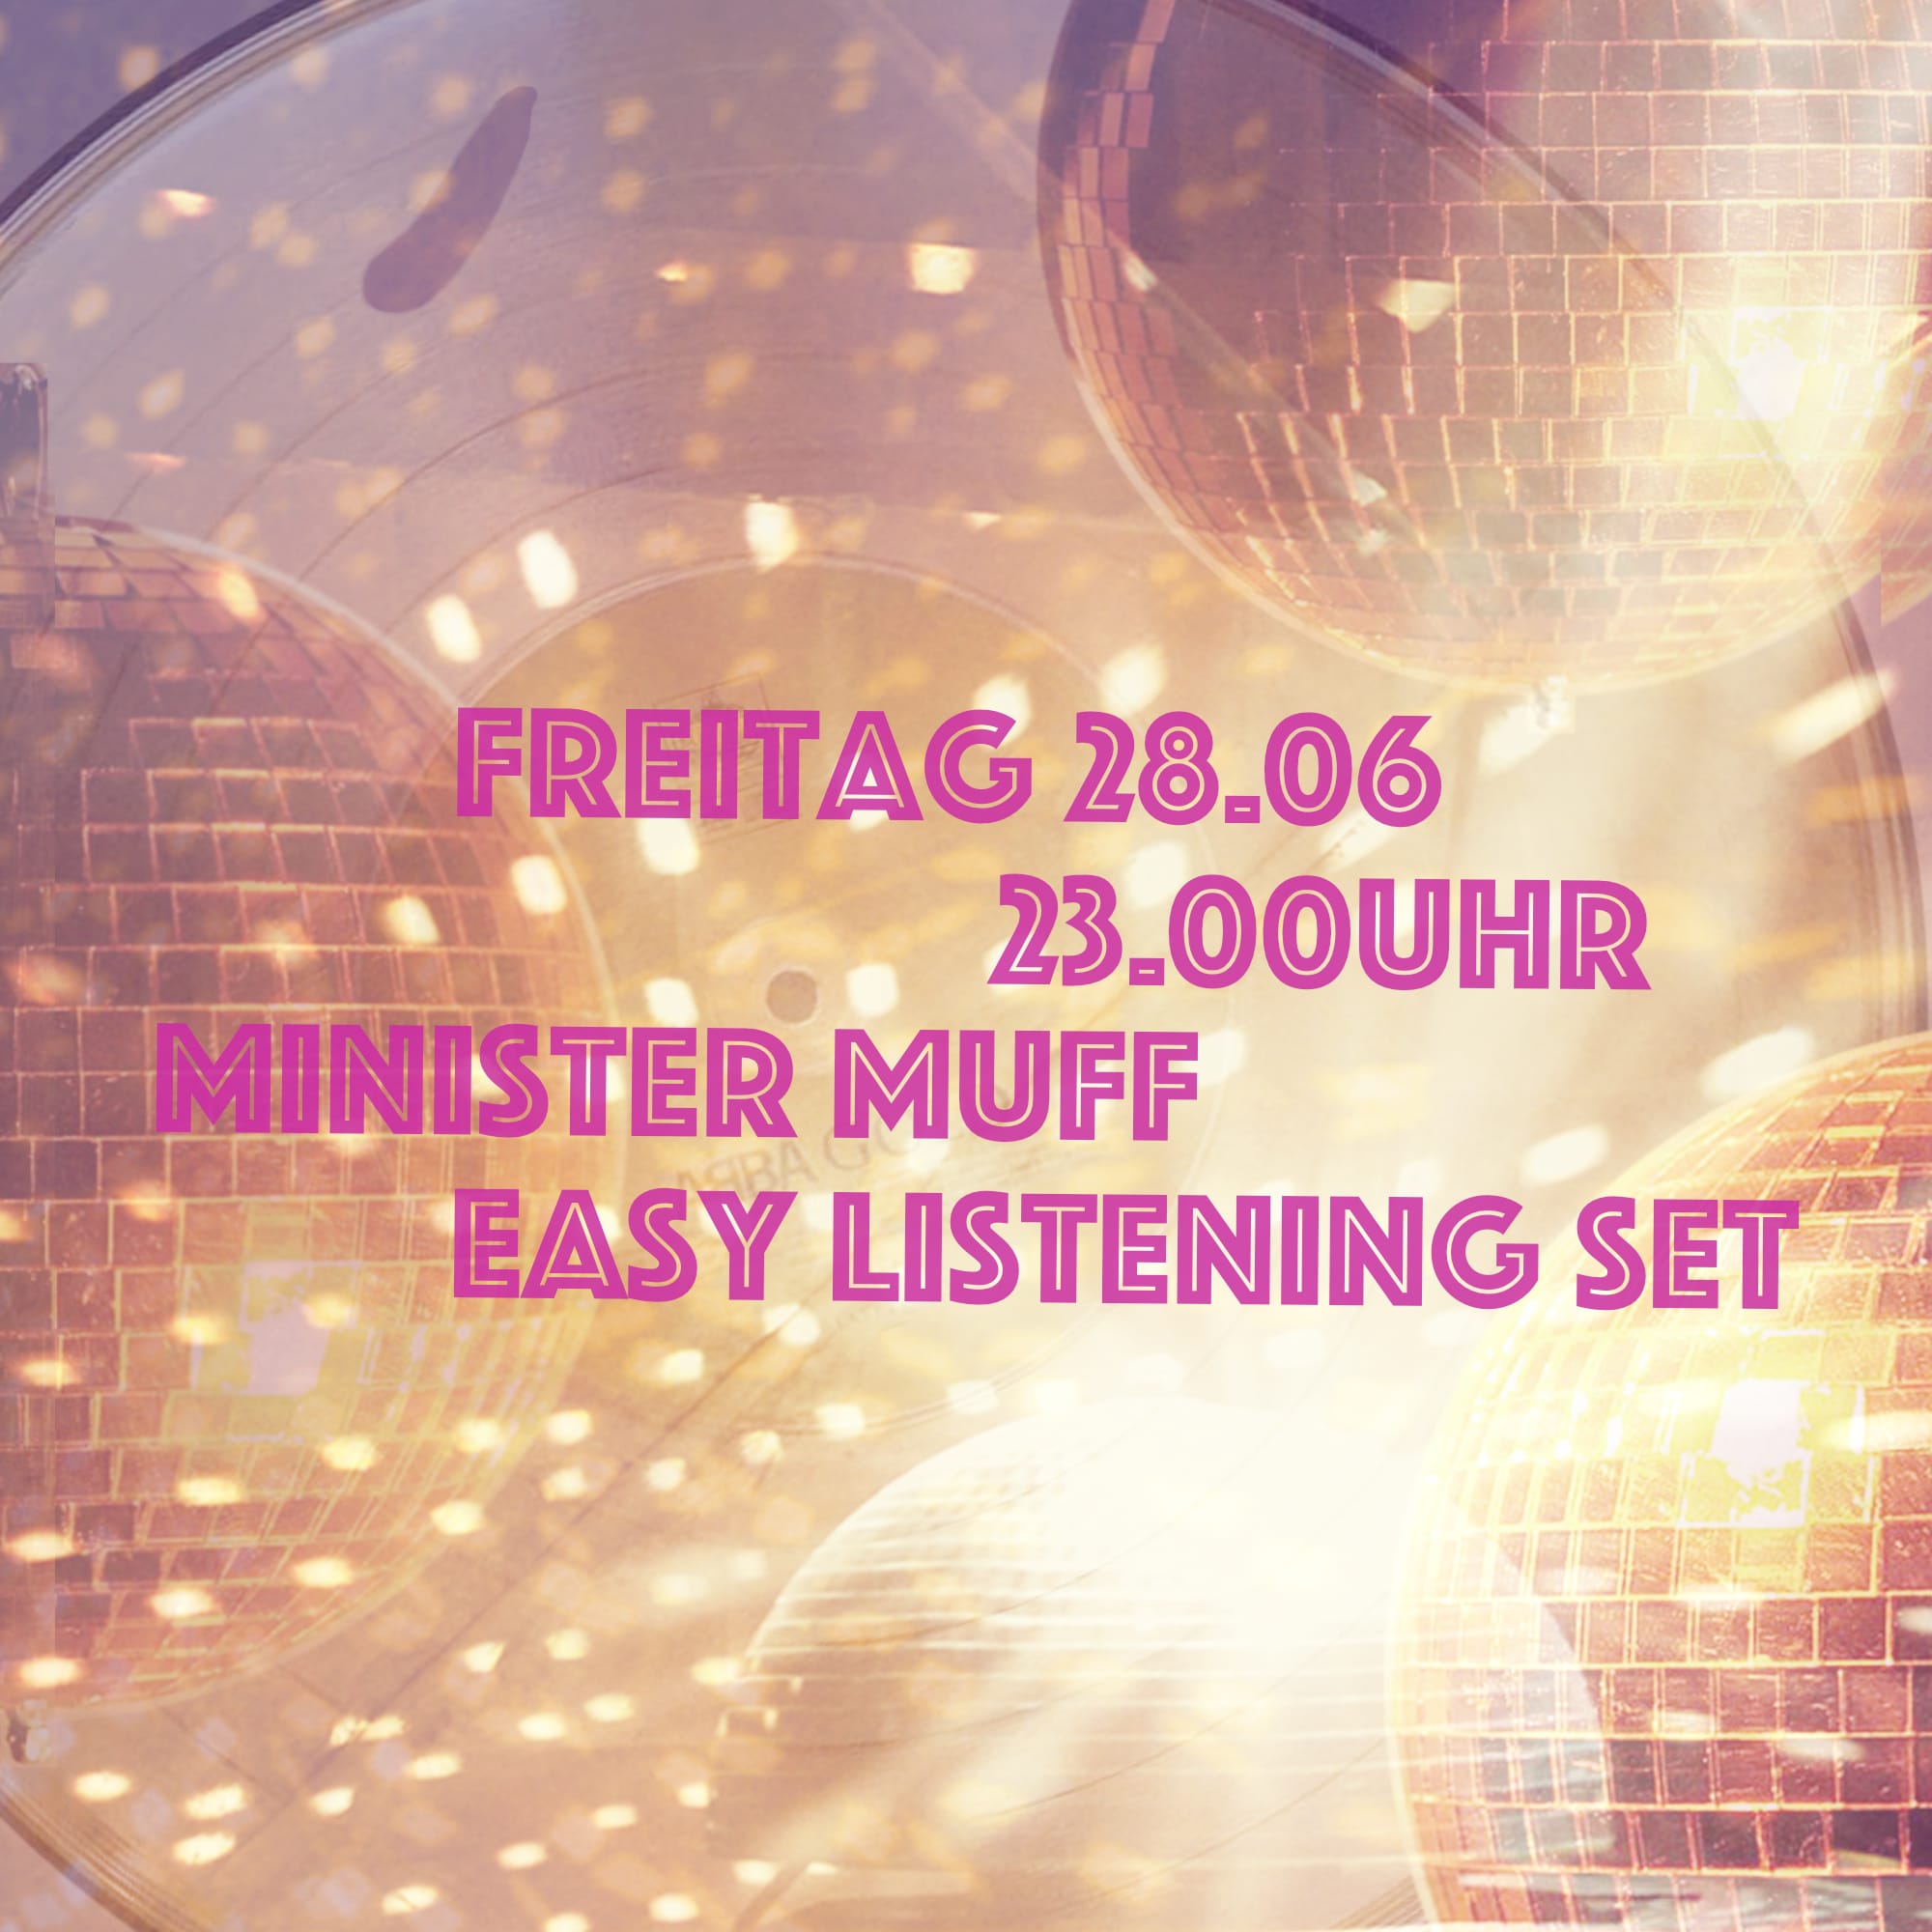 Mr. Muff – Easy Listening Set